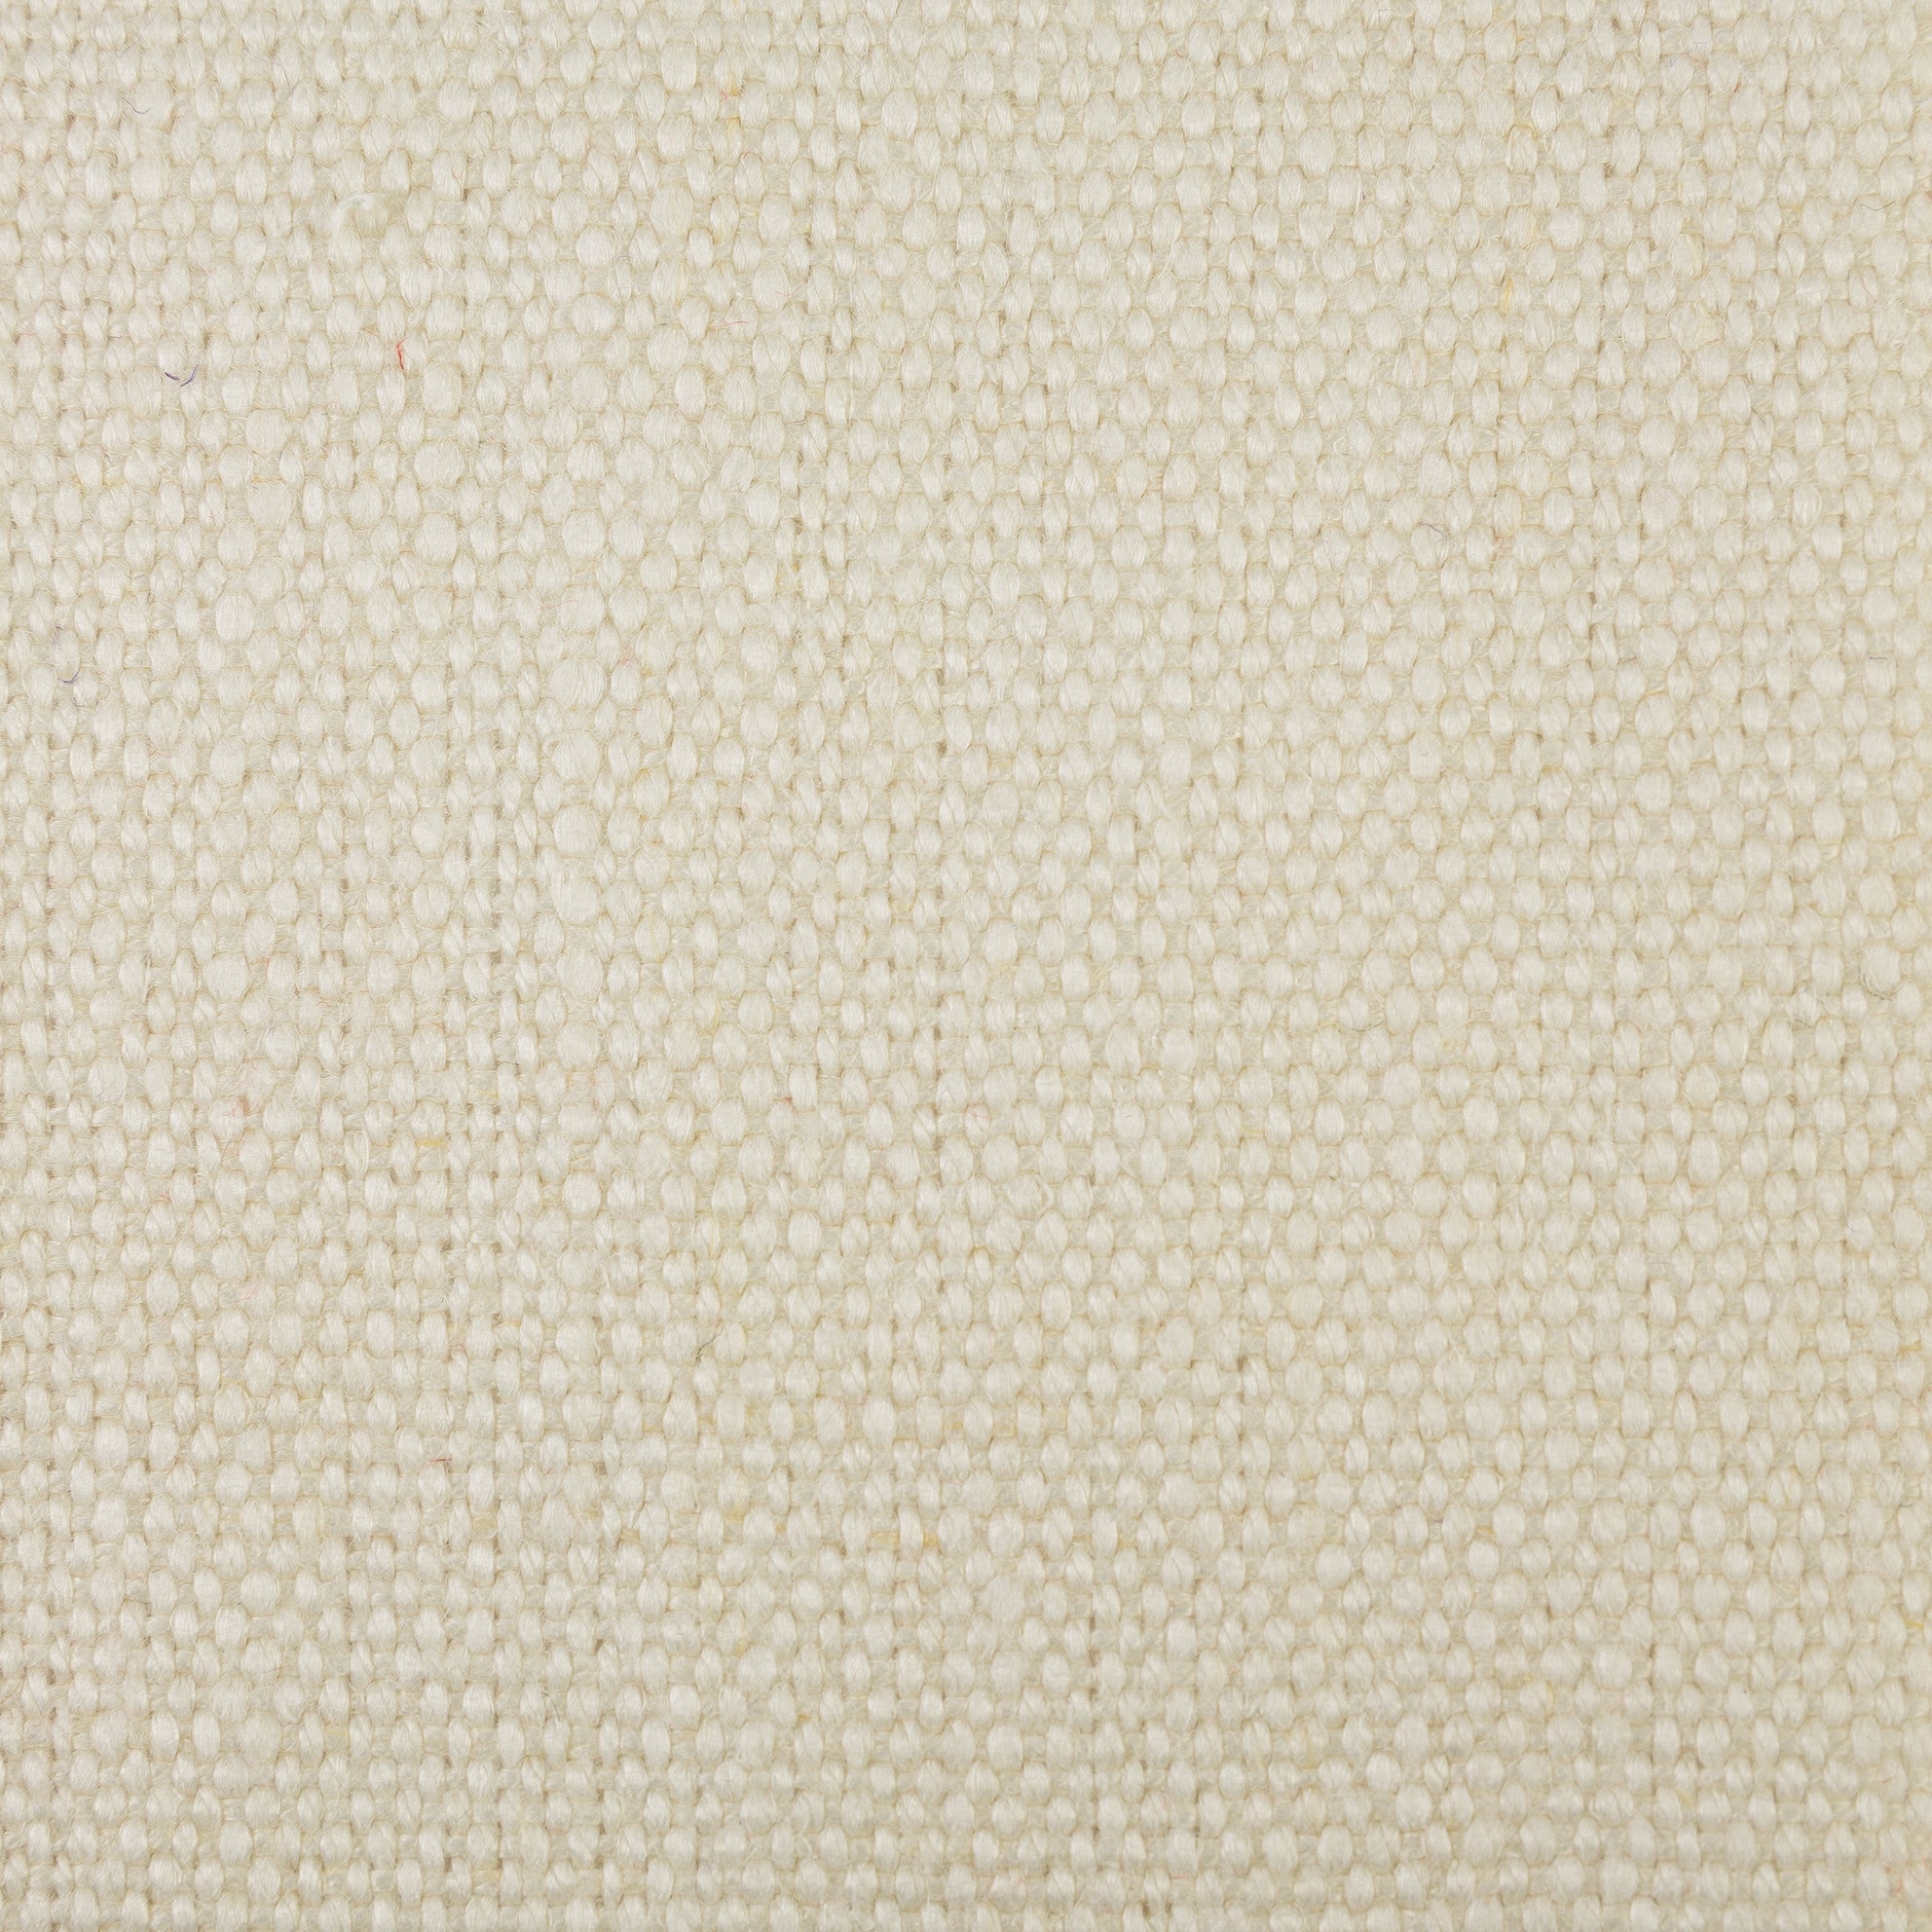 Woven Plain Fabric - Whitby 08/021 Cool Coconut | Nicholas Engert Interiors